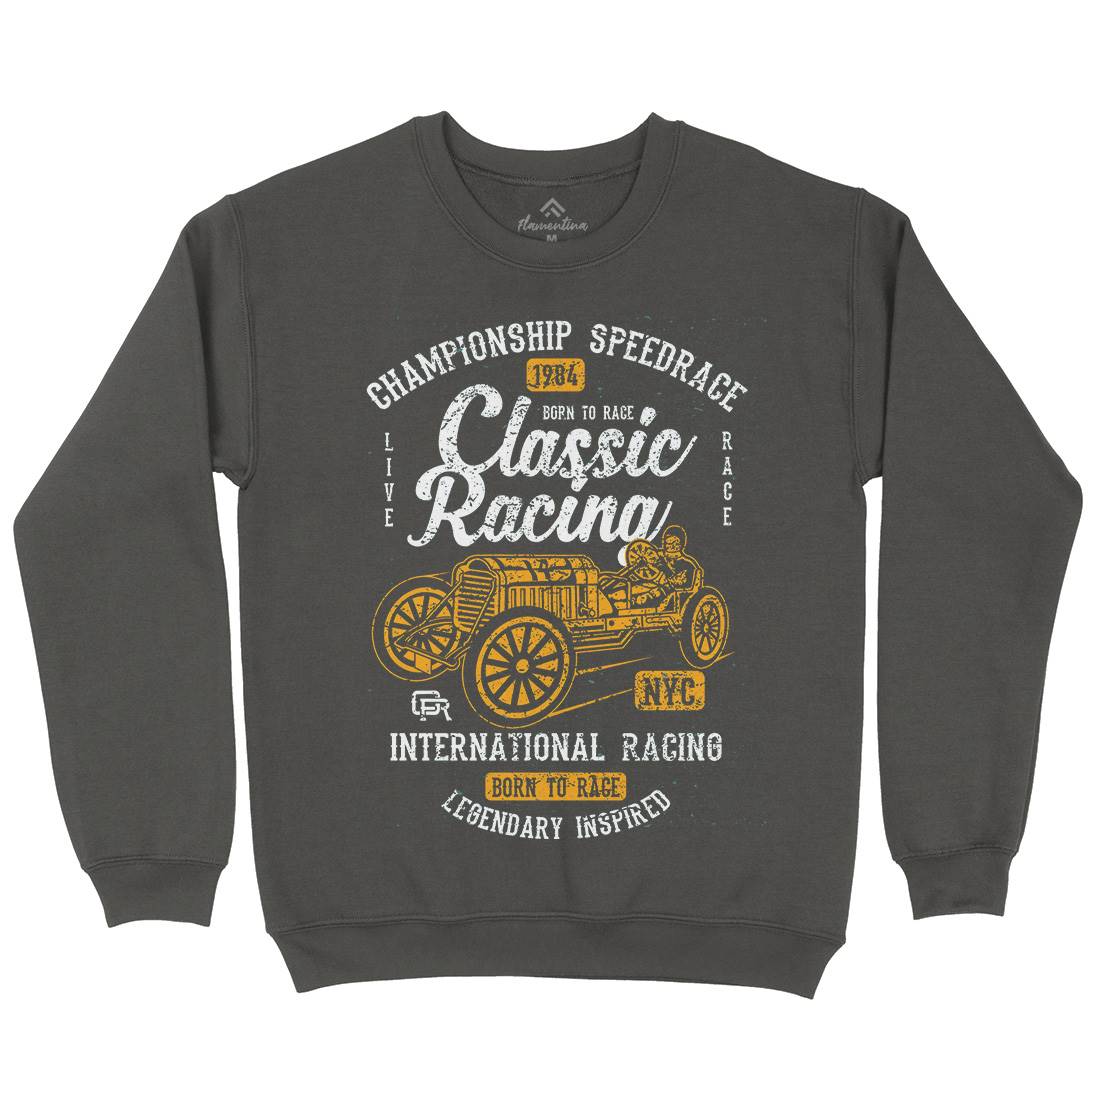 Classic Racing Kids Crew Neck Sweatshirt Cars A037